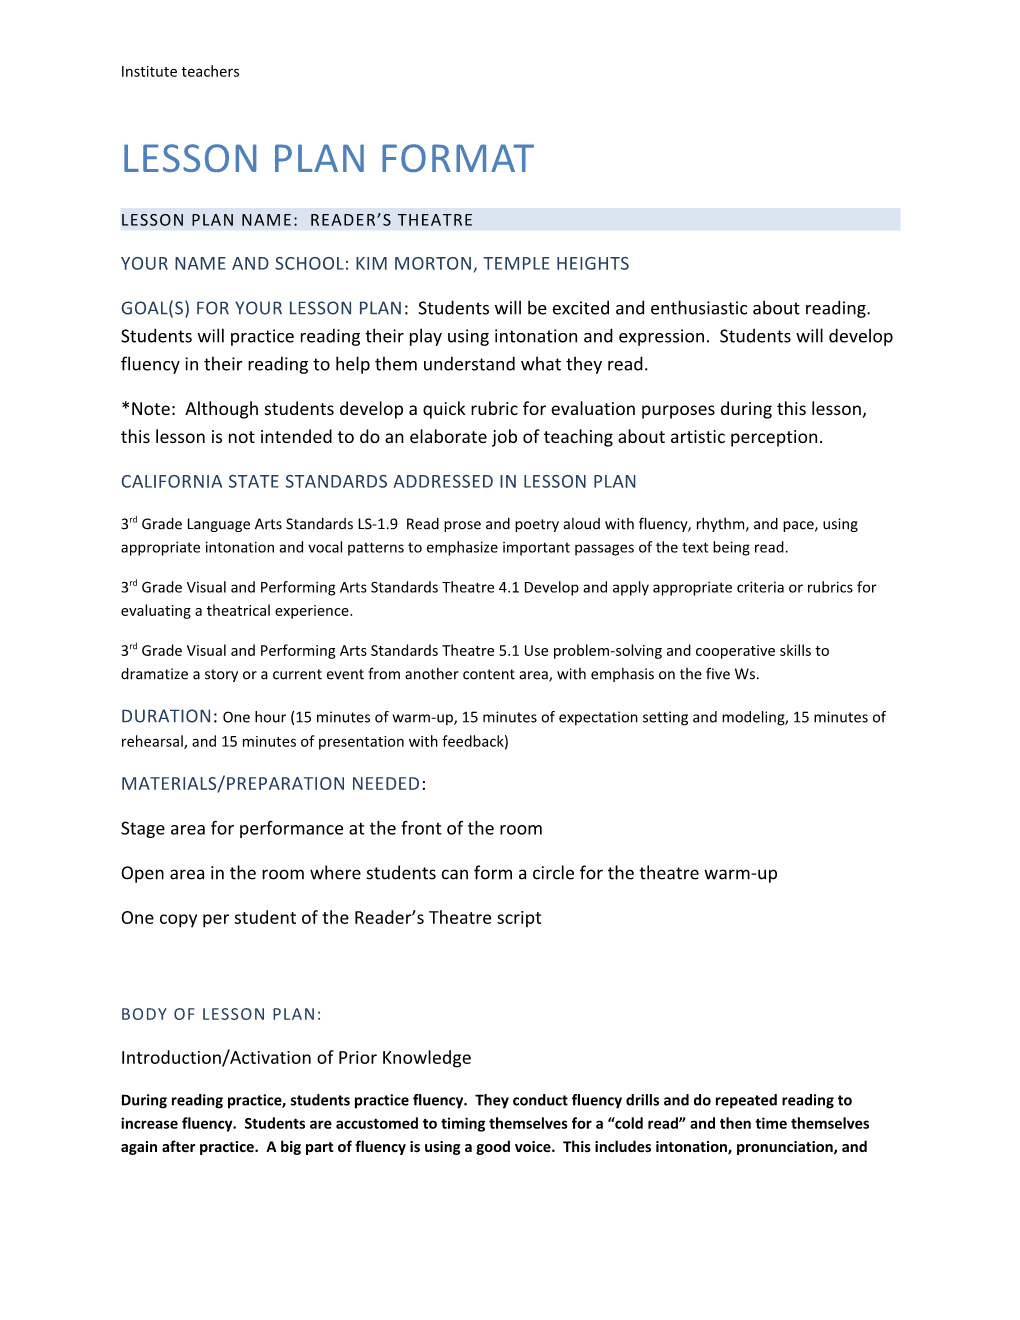 Lesson Plan Format s5